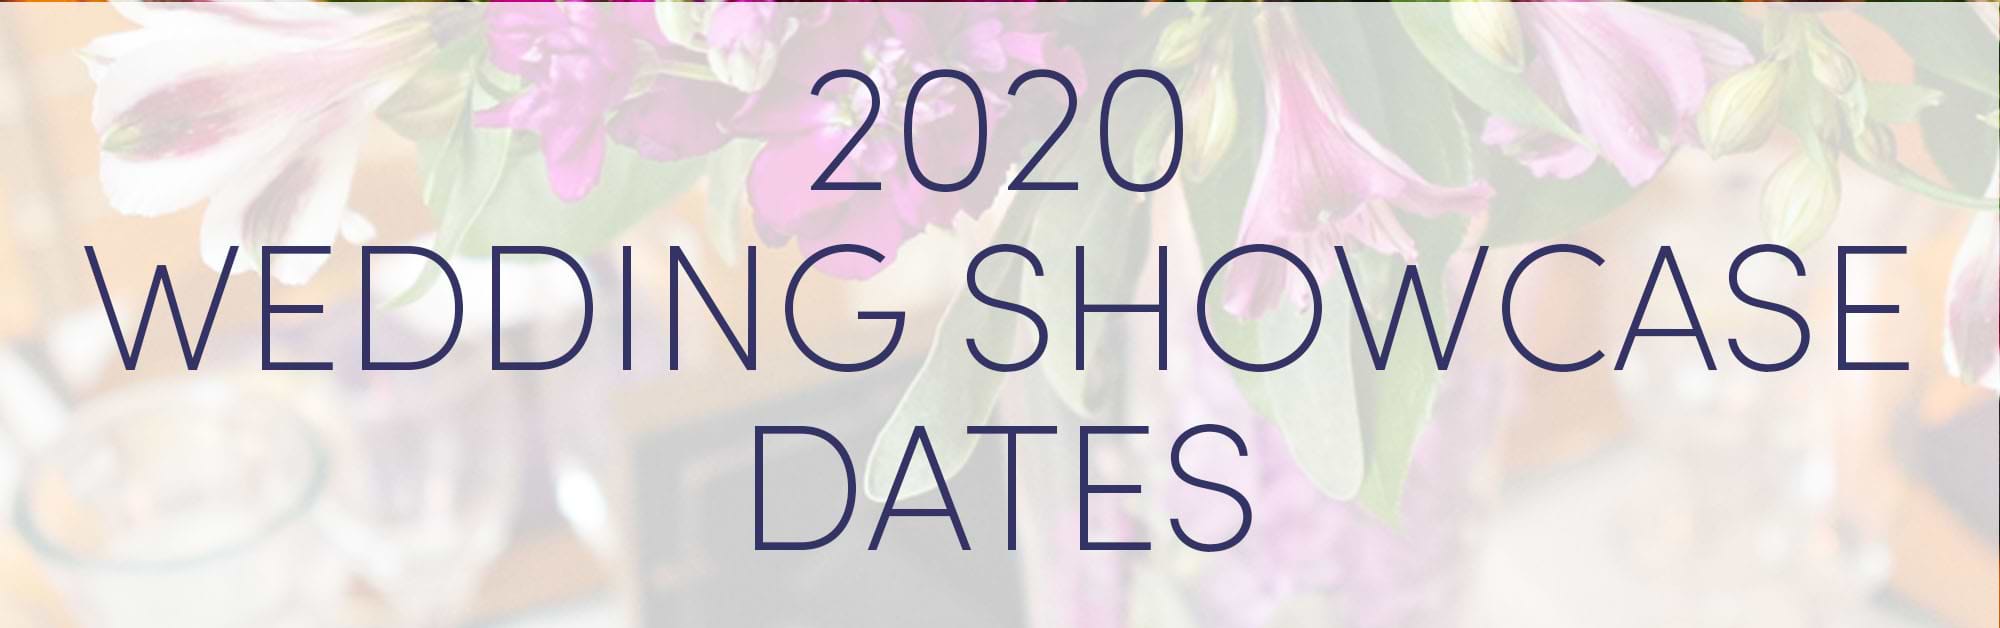 Wedding Showcase Dates 2020 Wedgewood Weddings-1